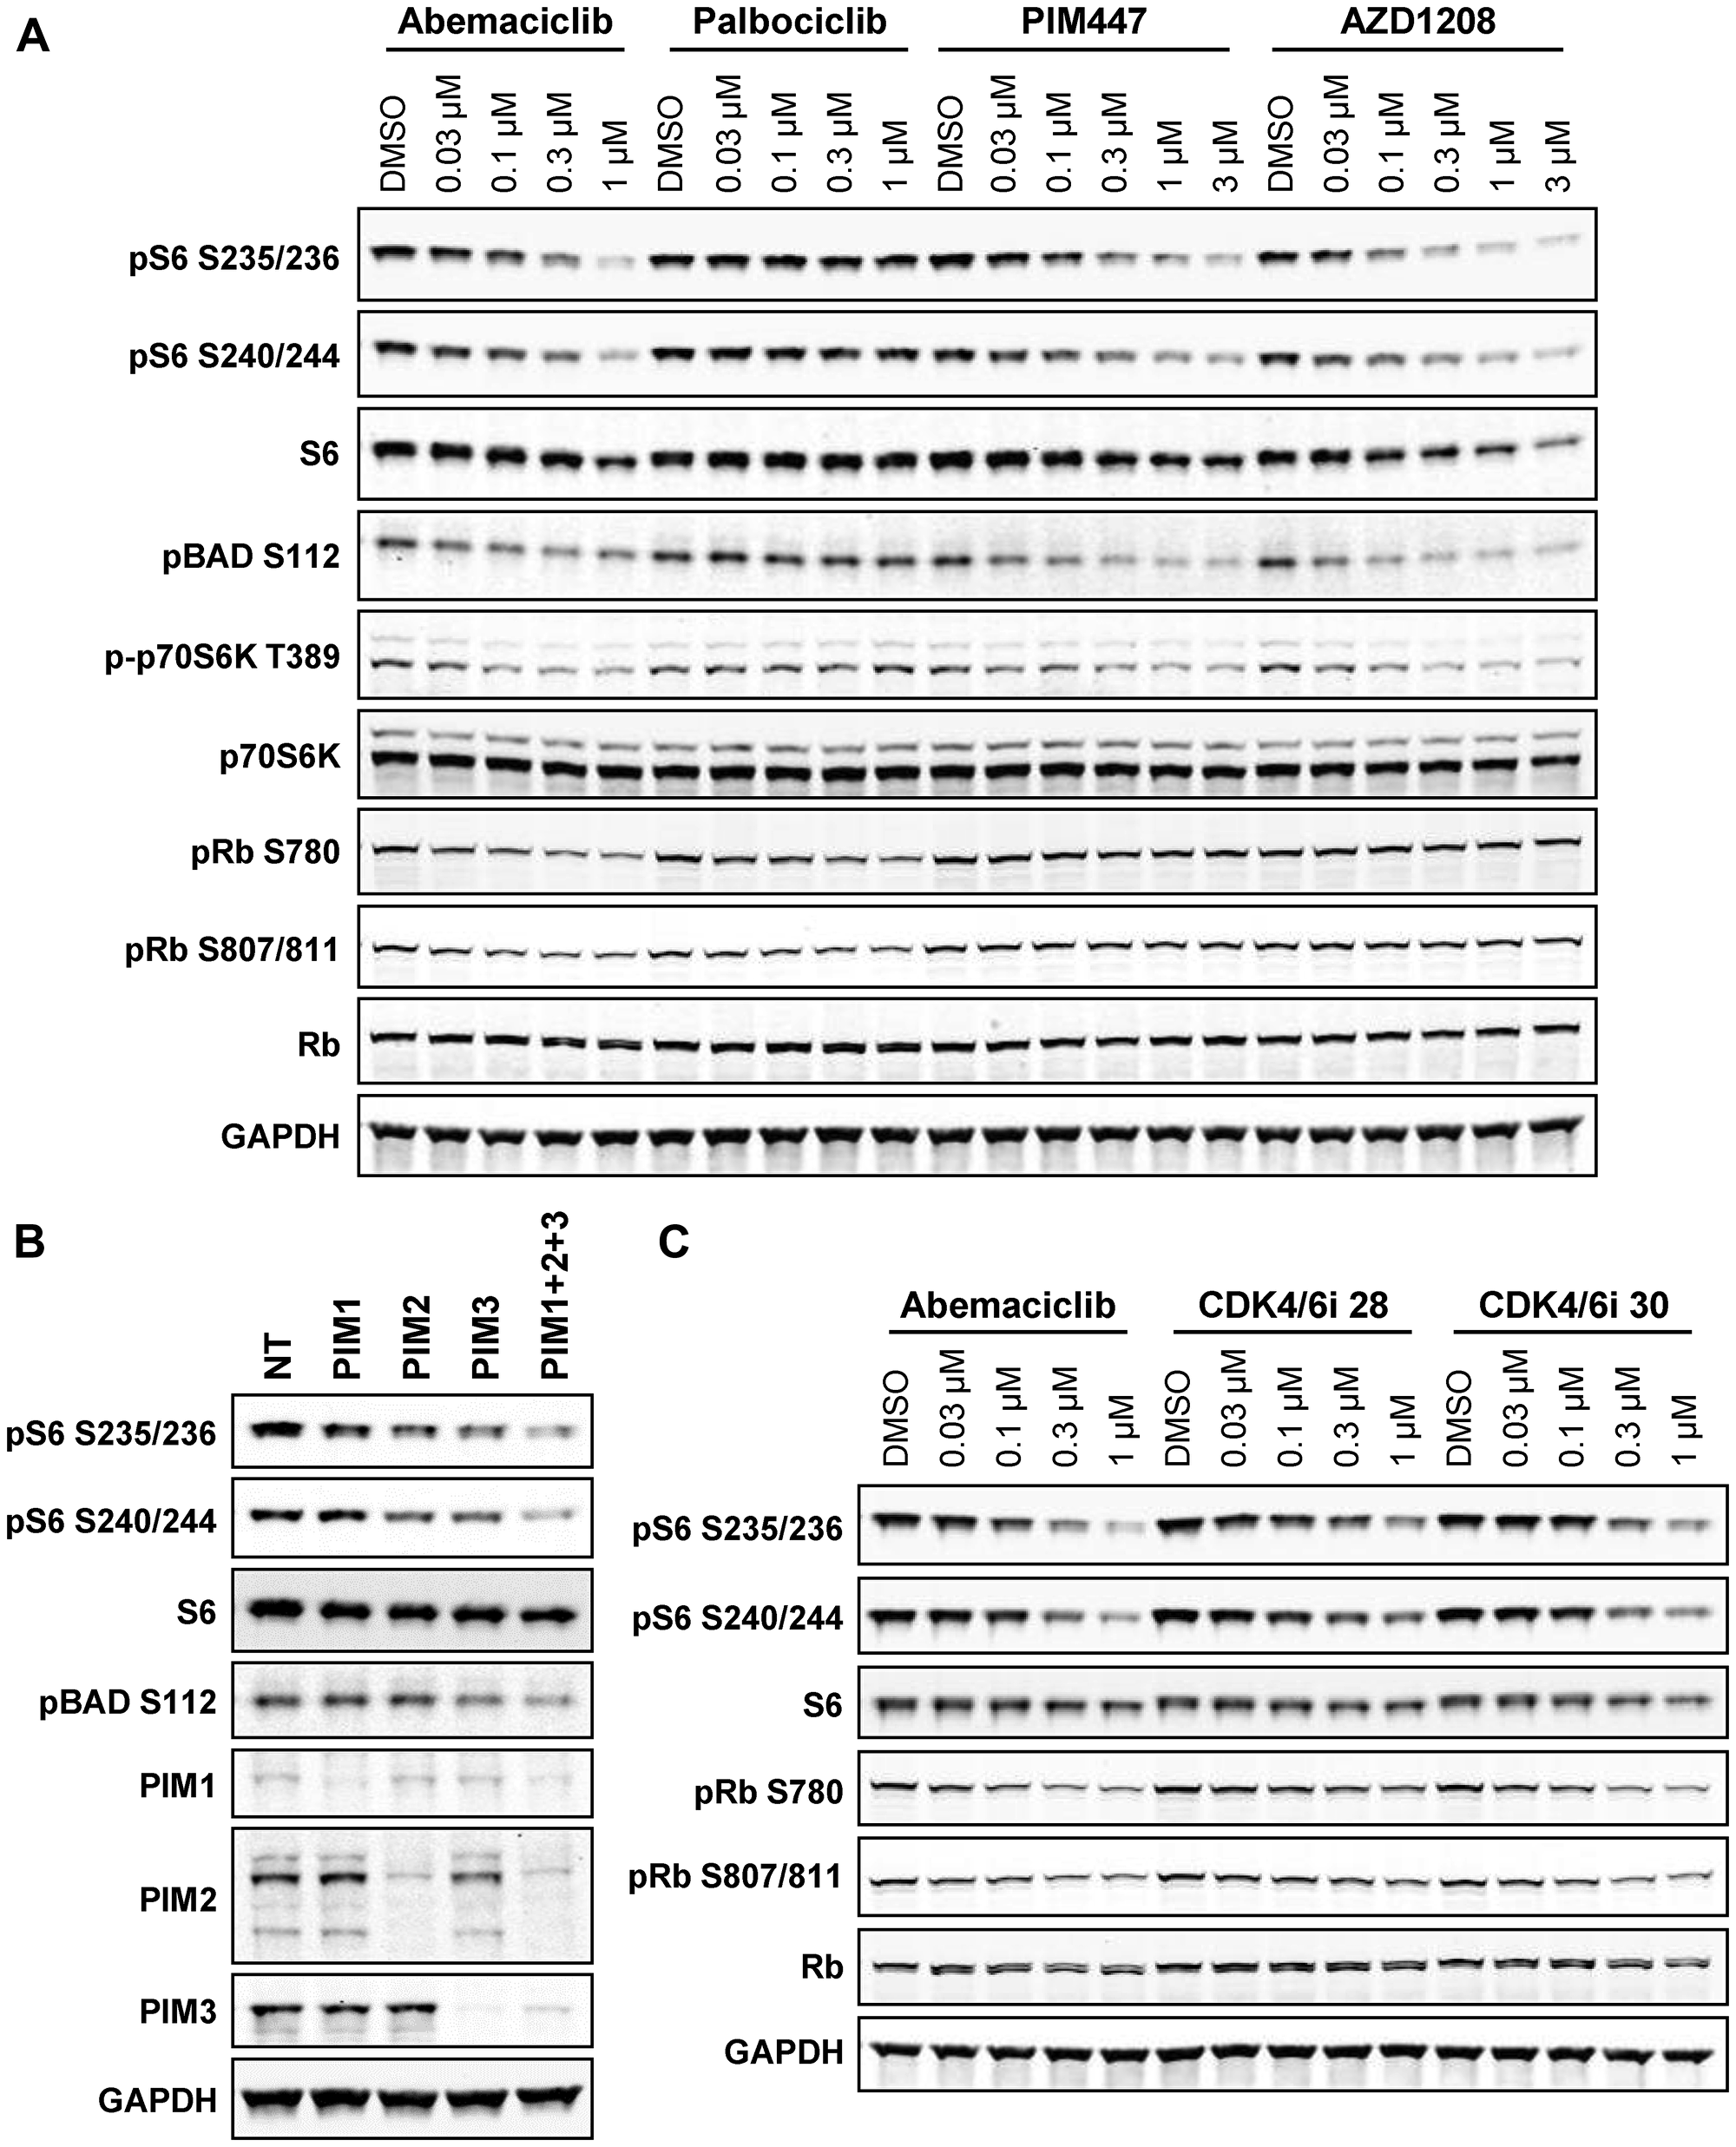 PIM kinase inhibition phenocopies effects of abemaciclib on mTOR signaling.